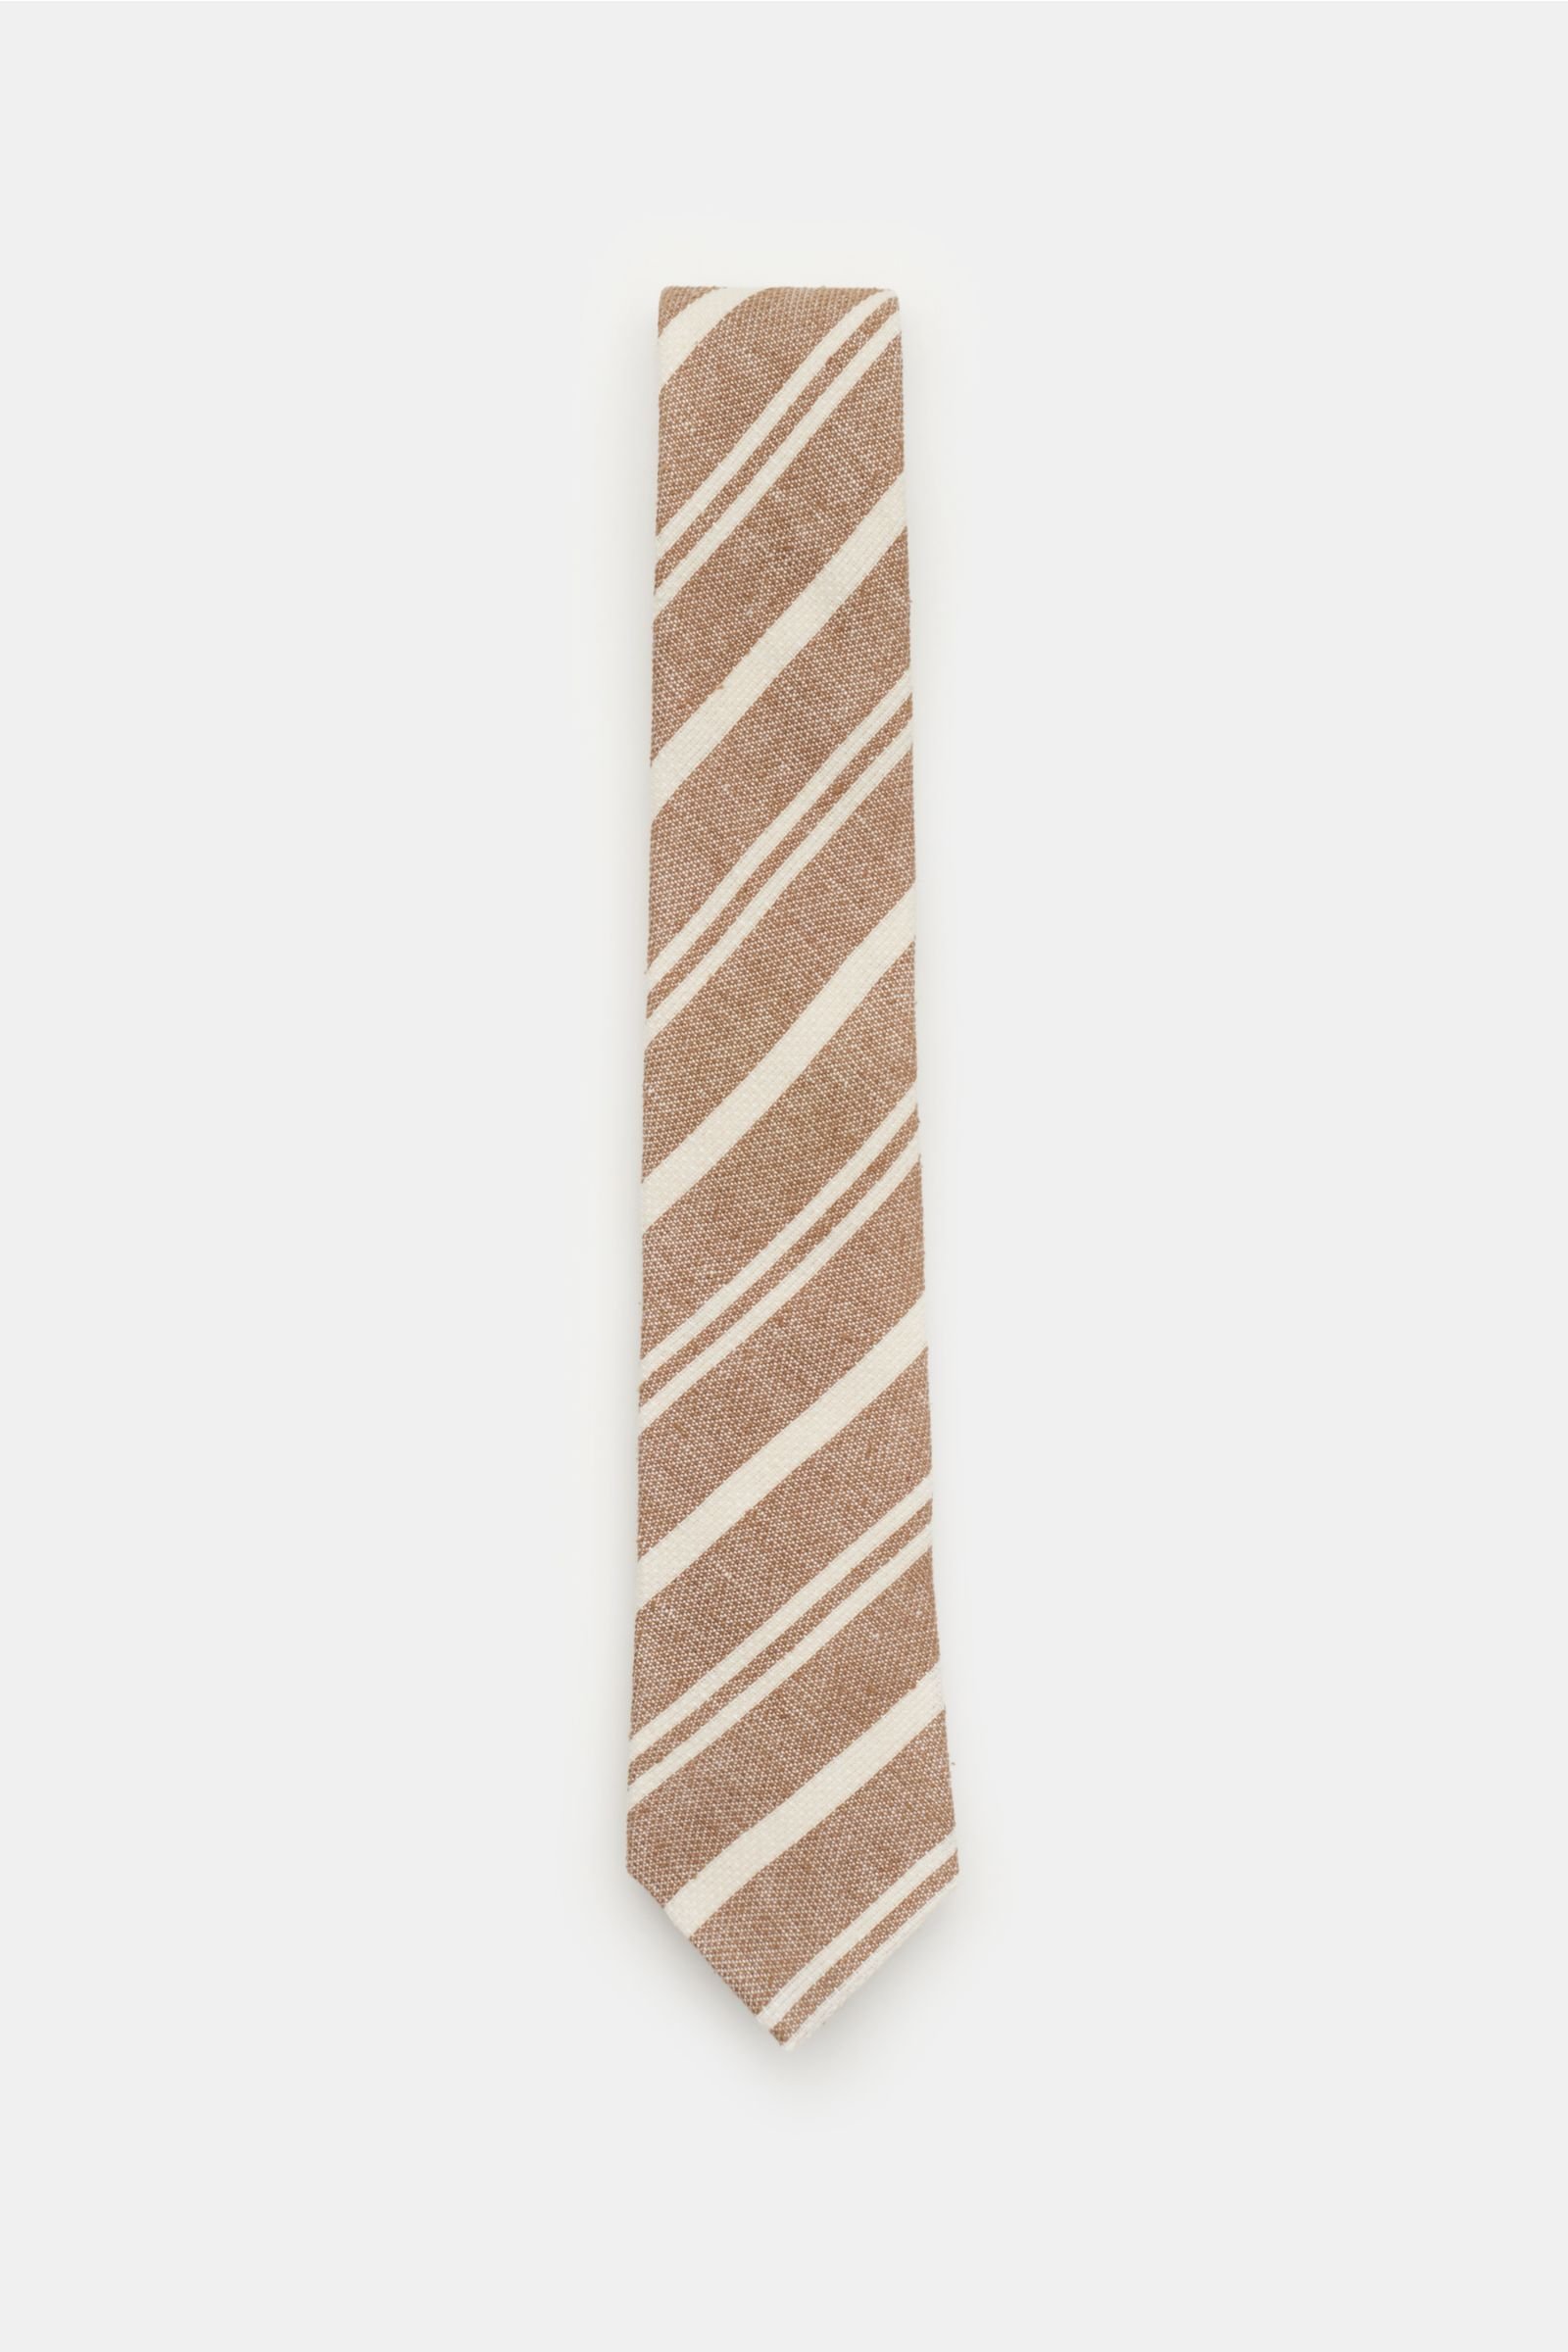 Linen tie grey-brown/cream striped